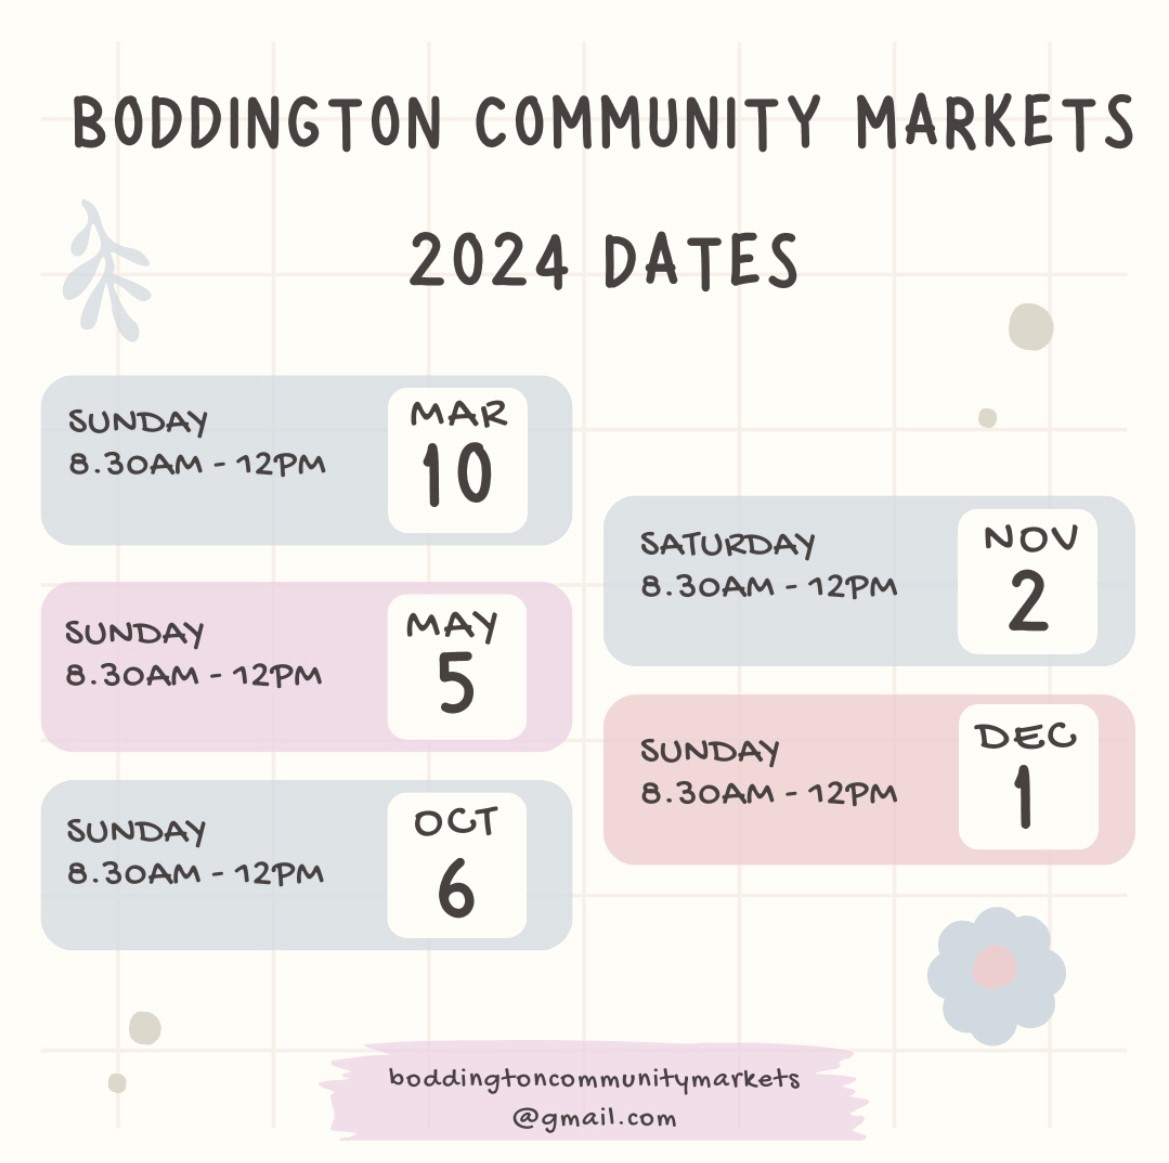 Boddington Community Markets